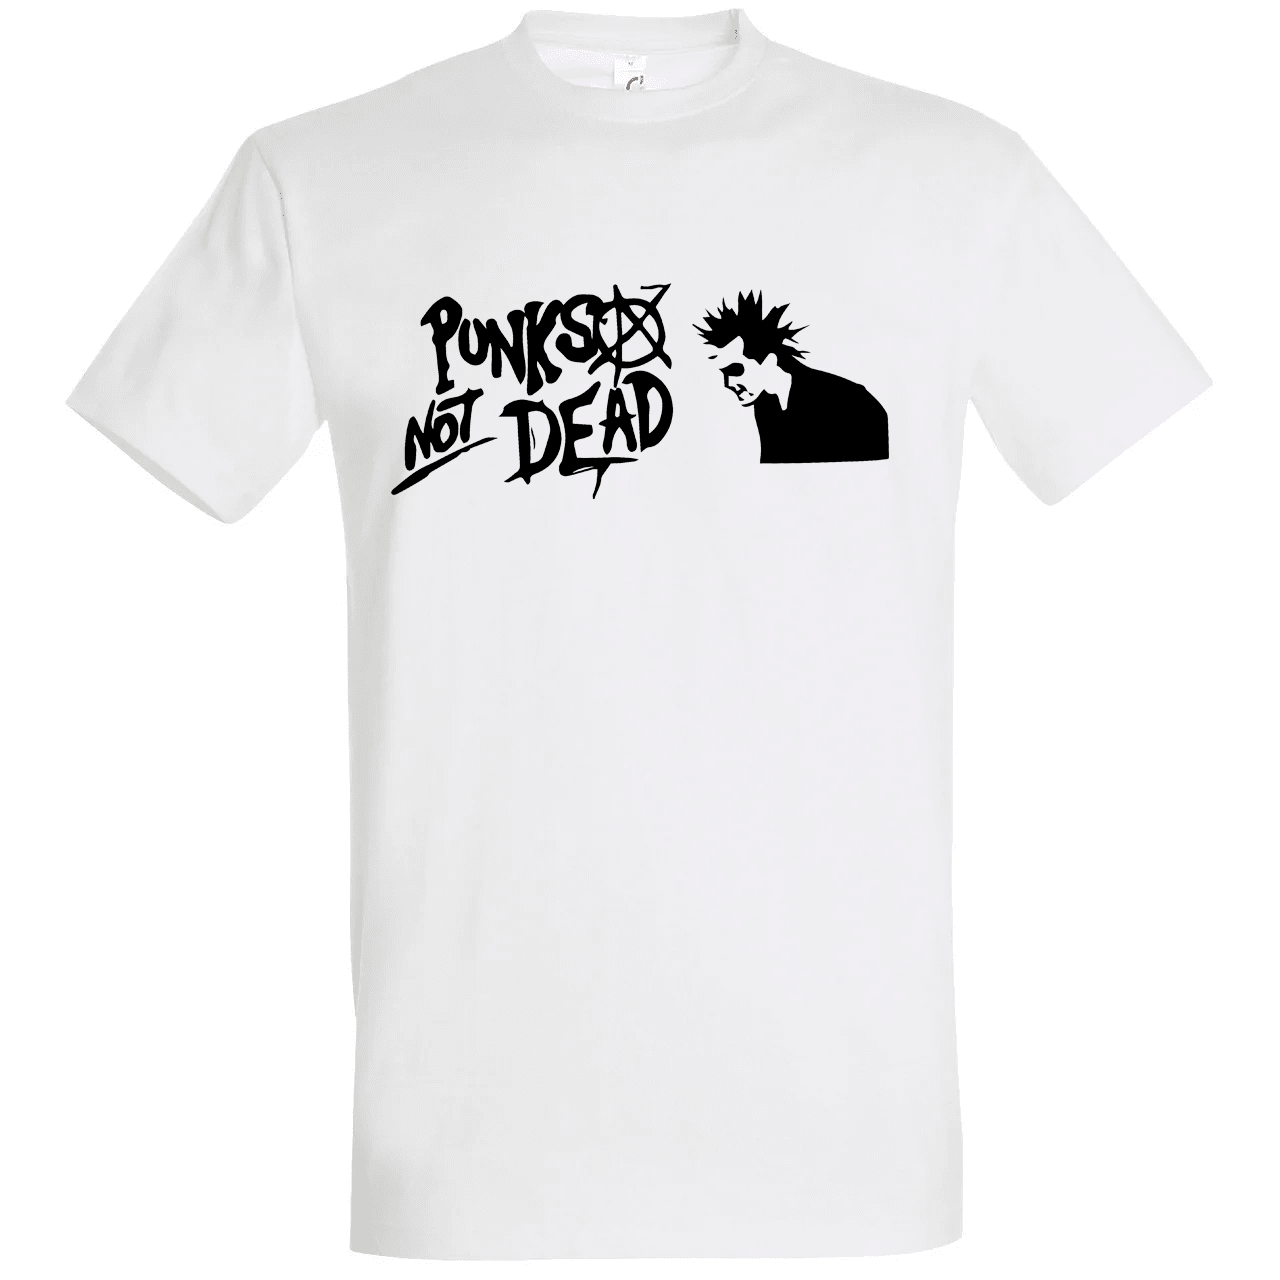 Біла футболка з написом принтом "Панки не гинуть. Punks not dead"